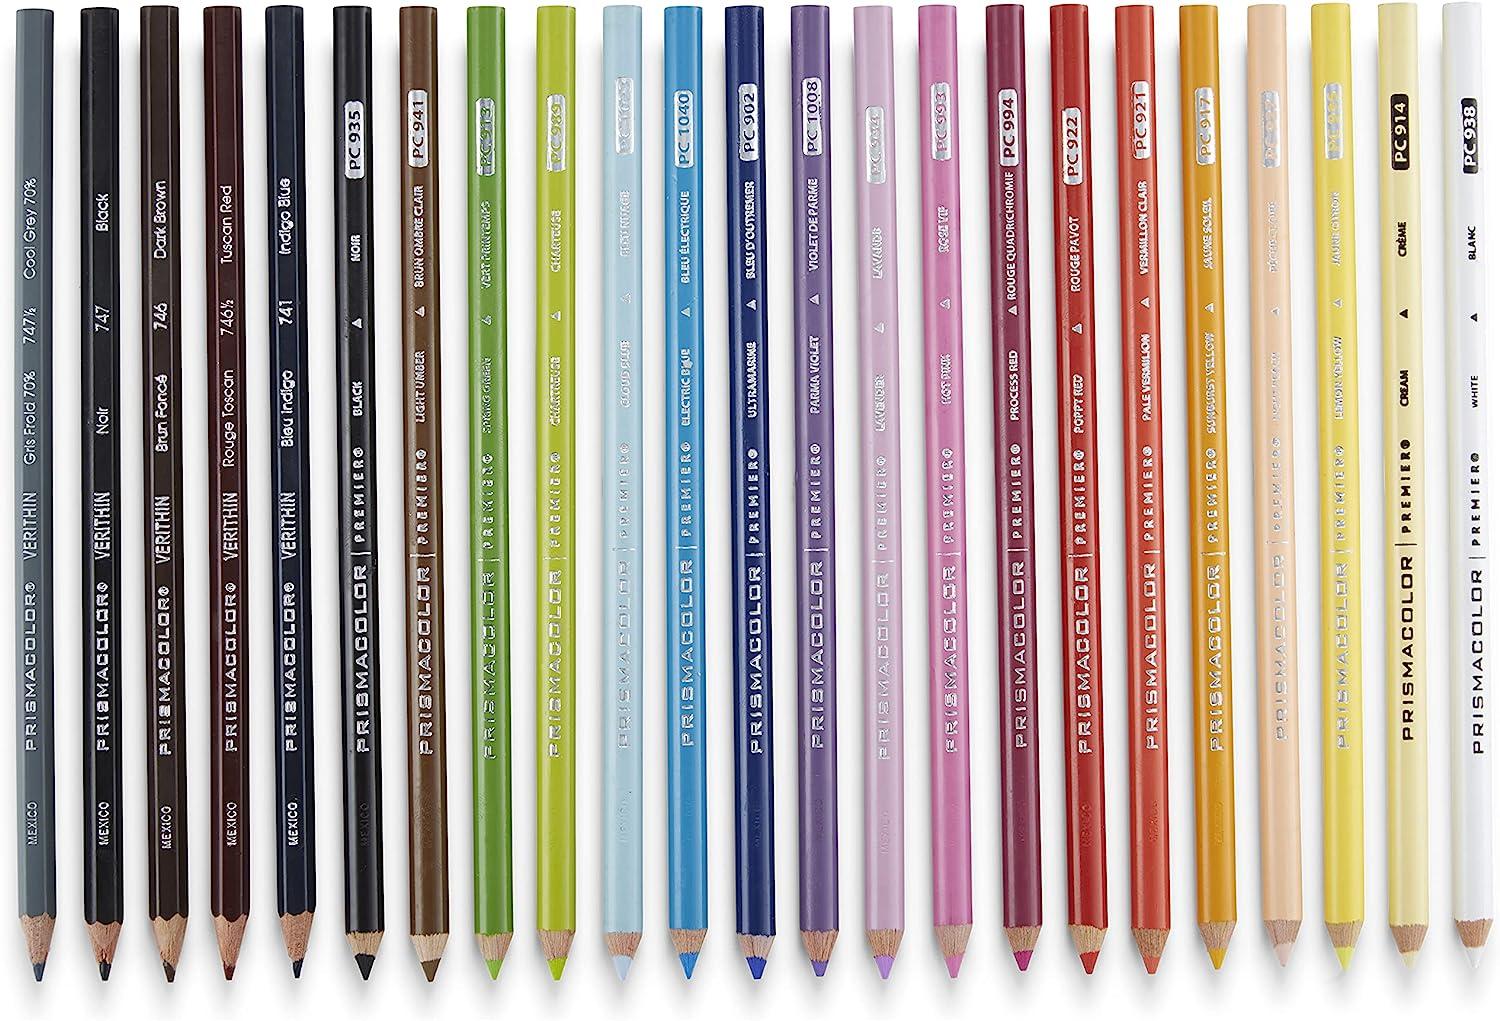 Prismacolor Scholar Colored Pencils, Adult Coloring, 48 Pack